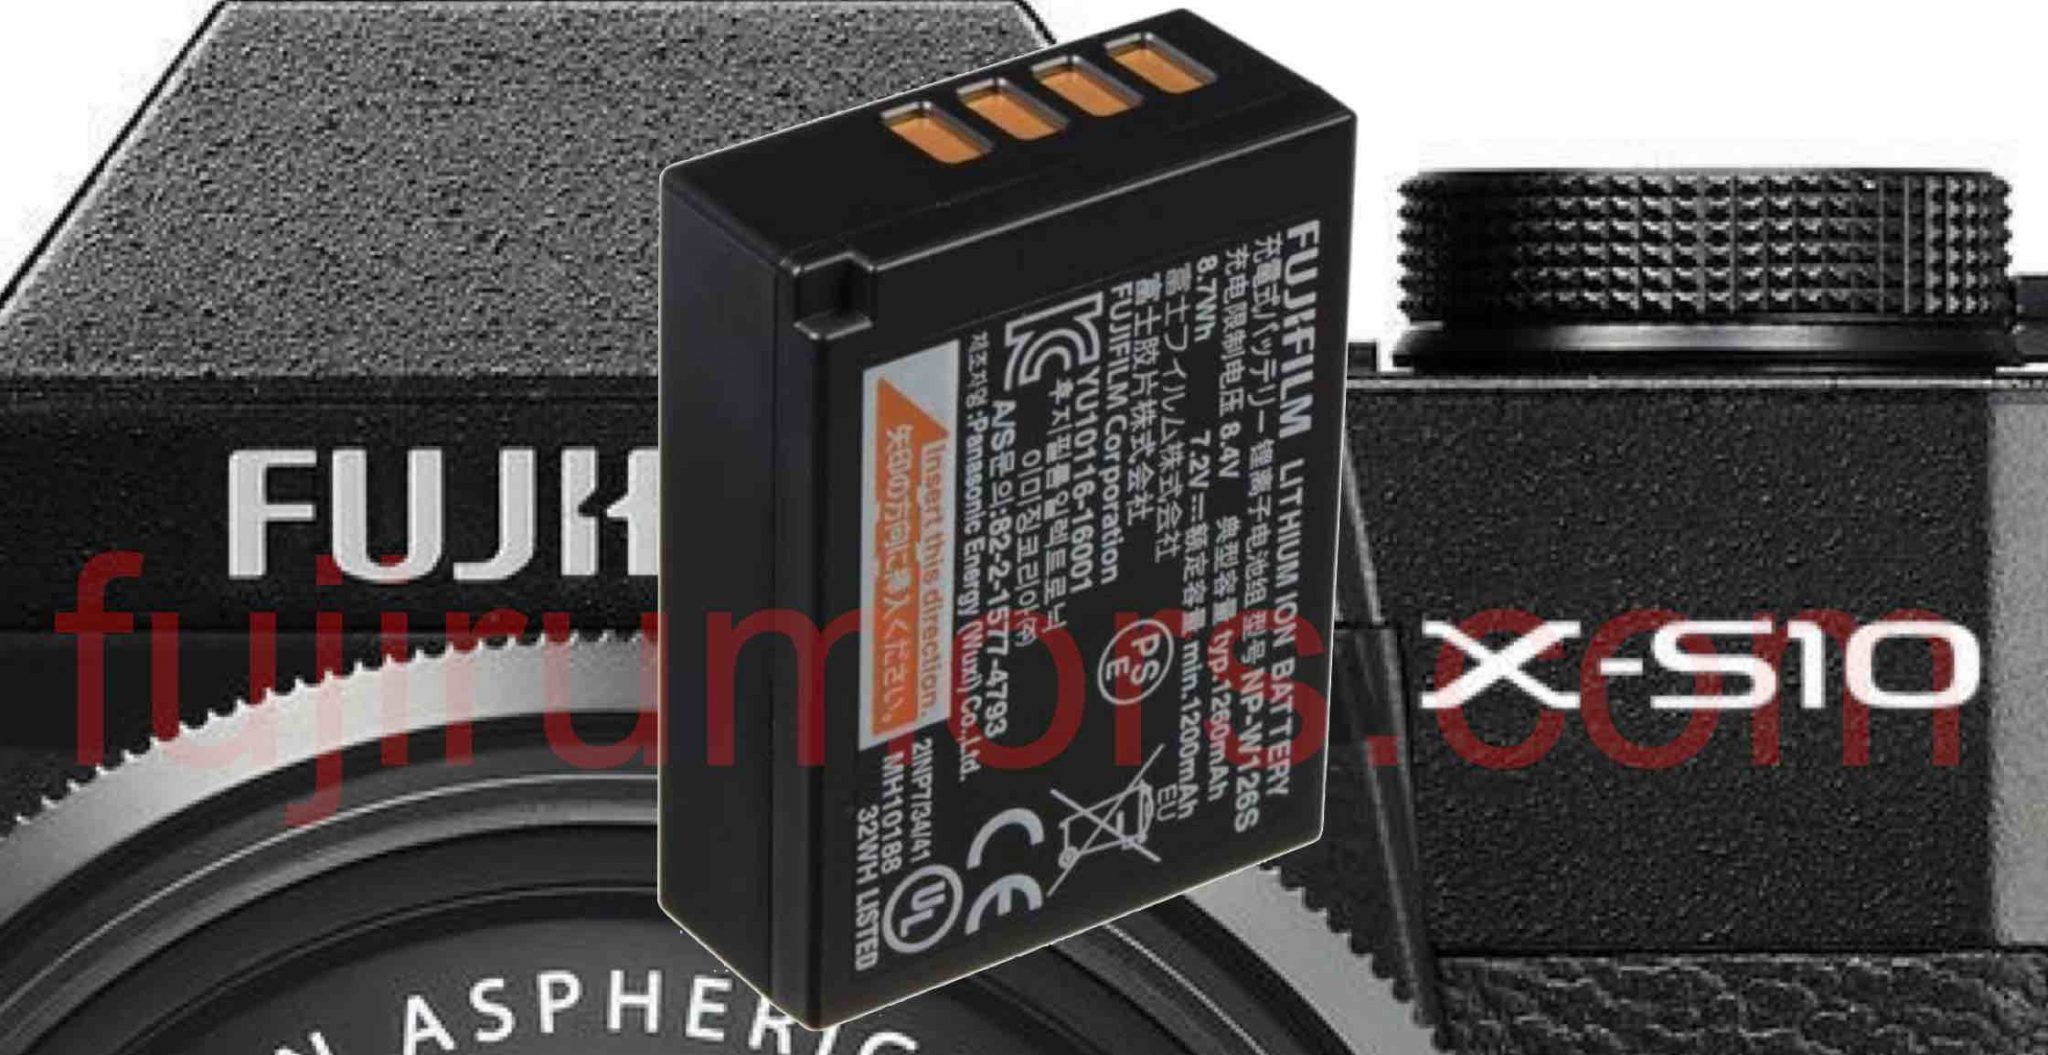 Fujifilm X-S10 Coming with NP-W126S Battery - Fuji Rumors